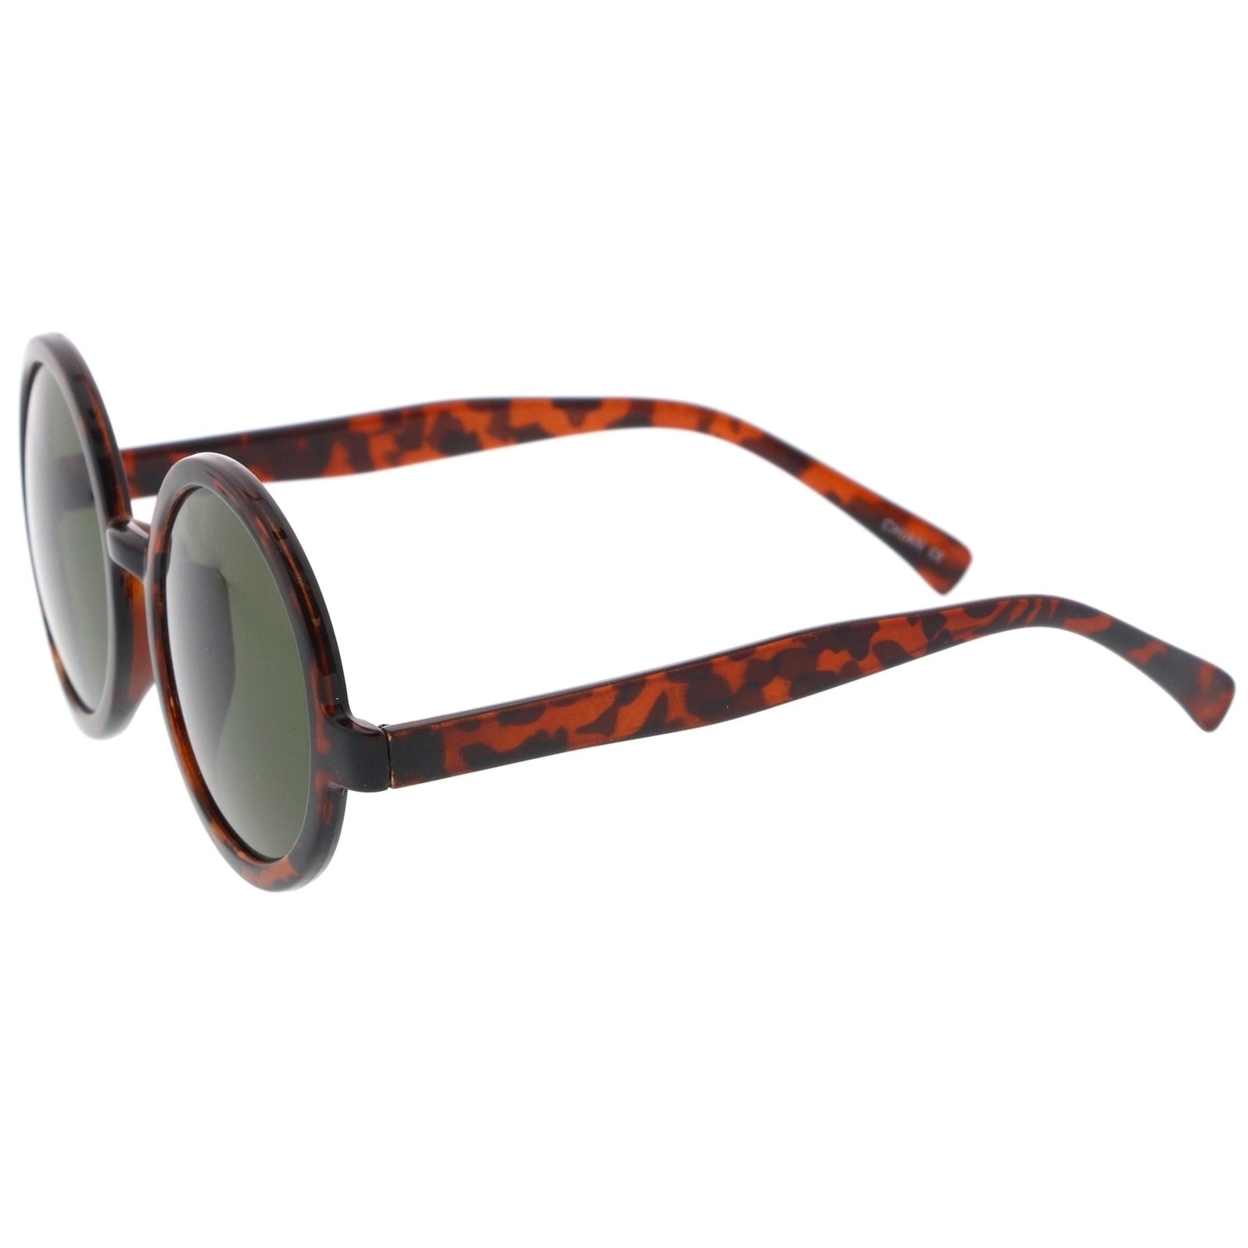 Classic Retro Horn Rimmed Neutral-Colored Lens Round Sunglasses 52mm - Matte Orange / Green